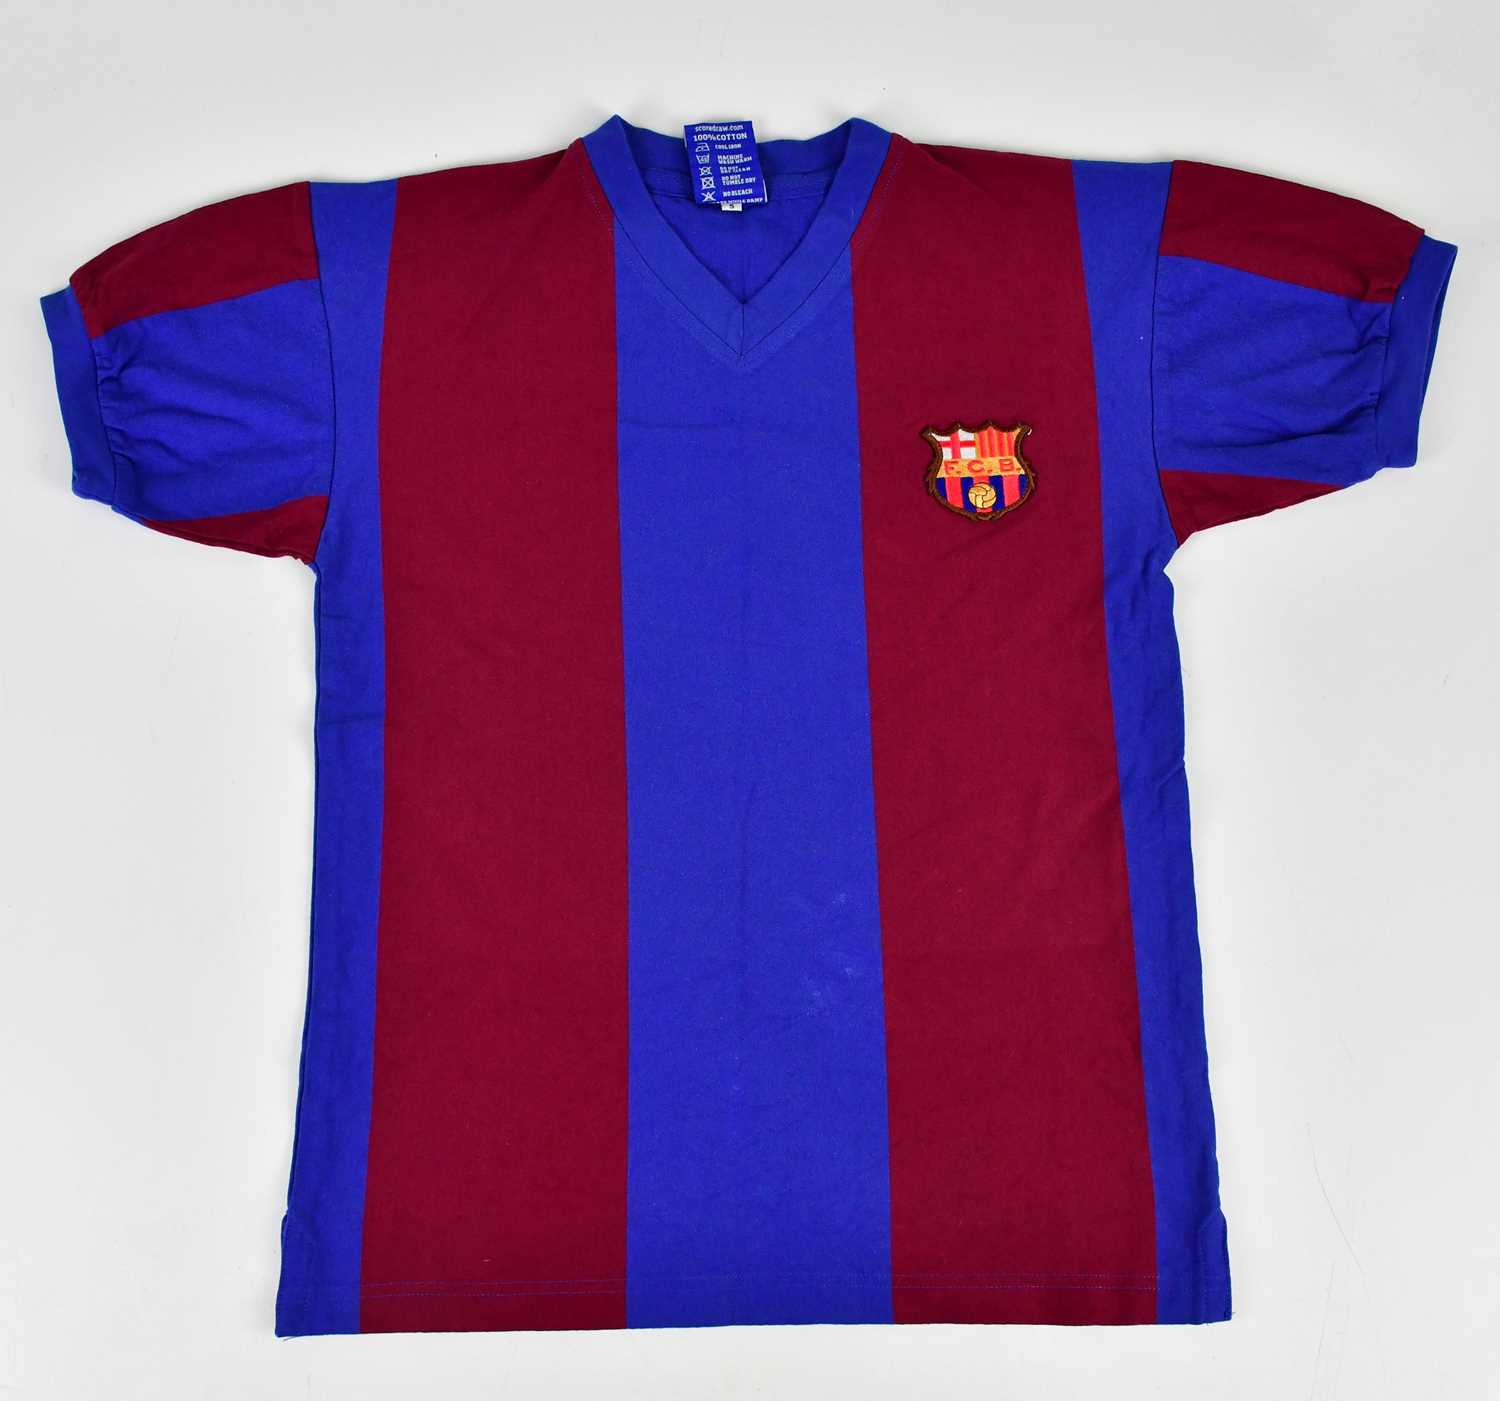 JOHANN CRUYFF; a signed retro style Barcelona football shirt, signed to the reverse, size S.